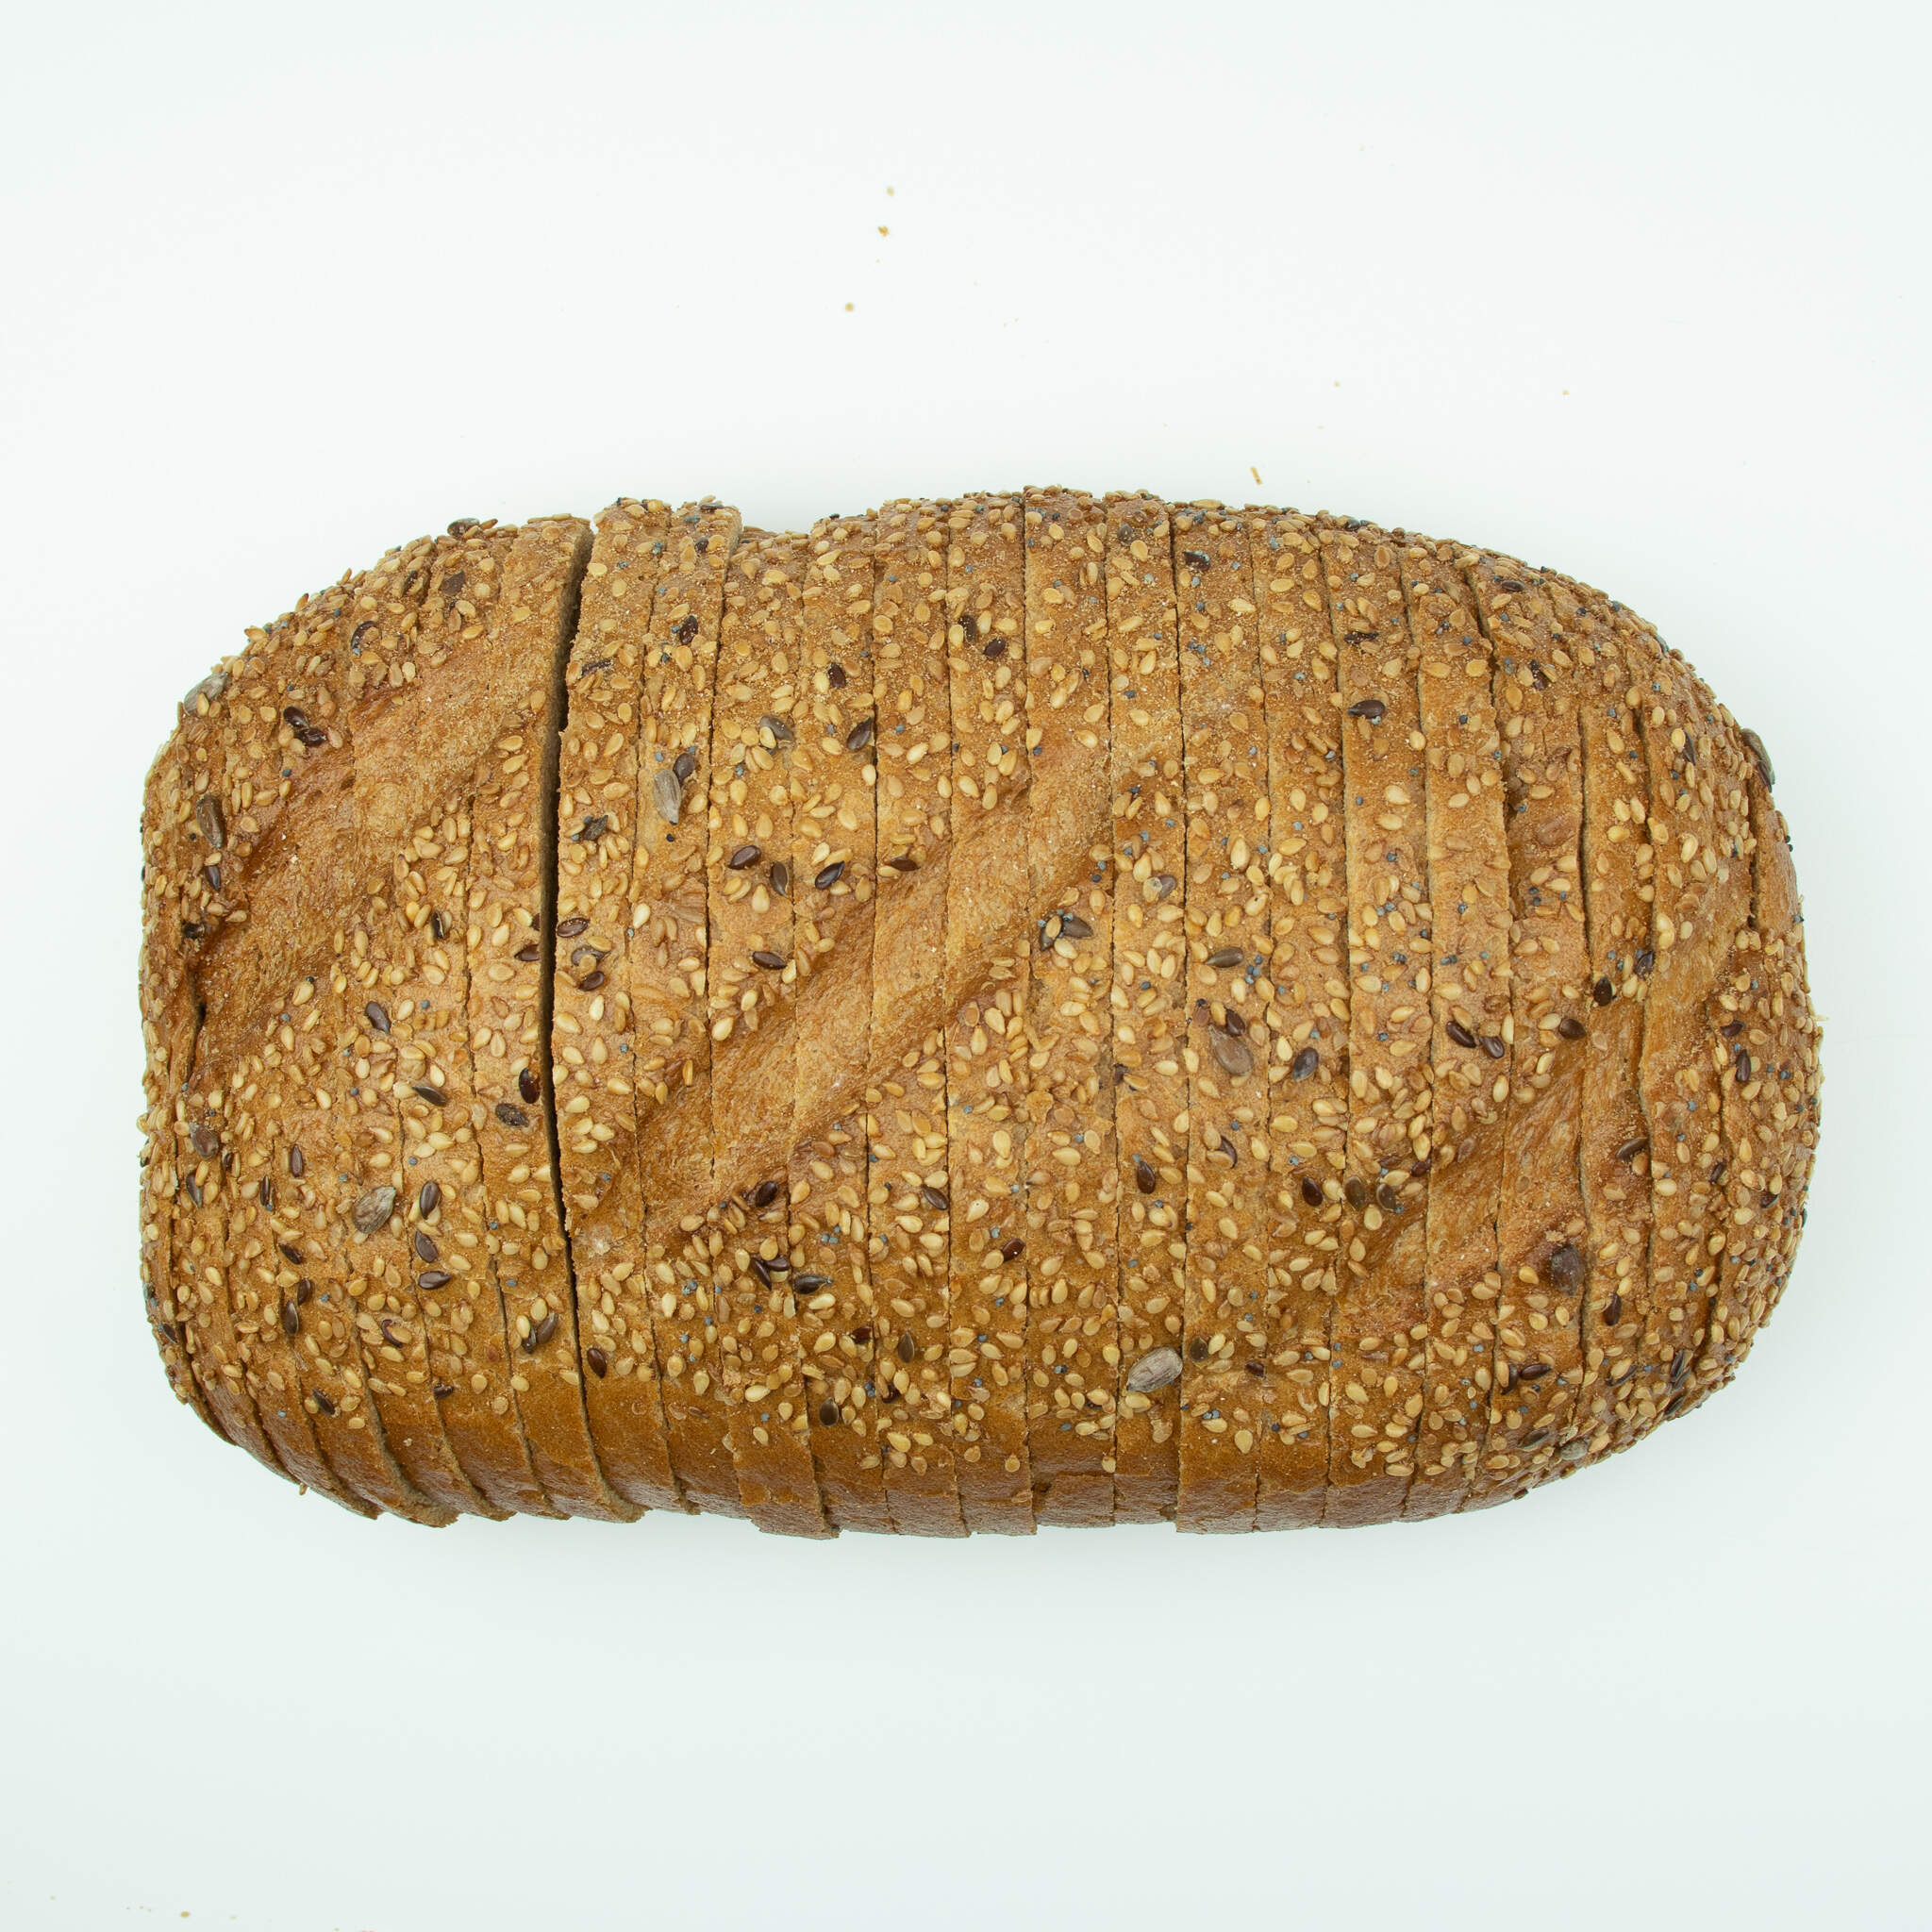 50% Rye Bread Seeded 450g